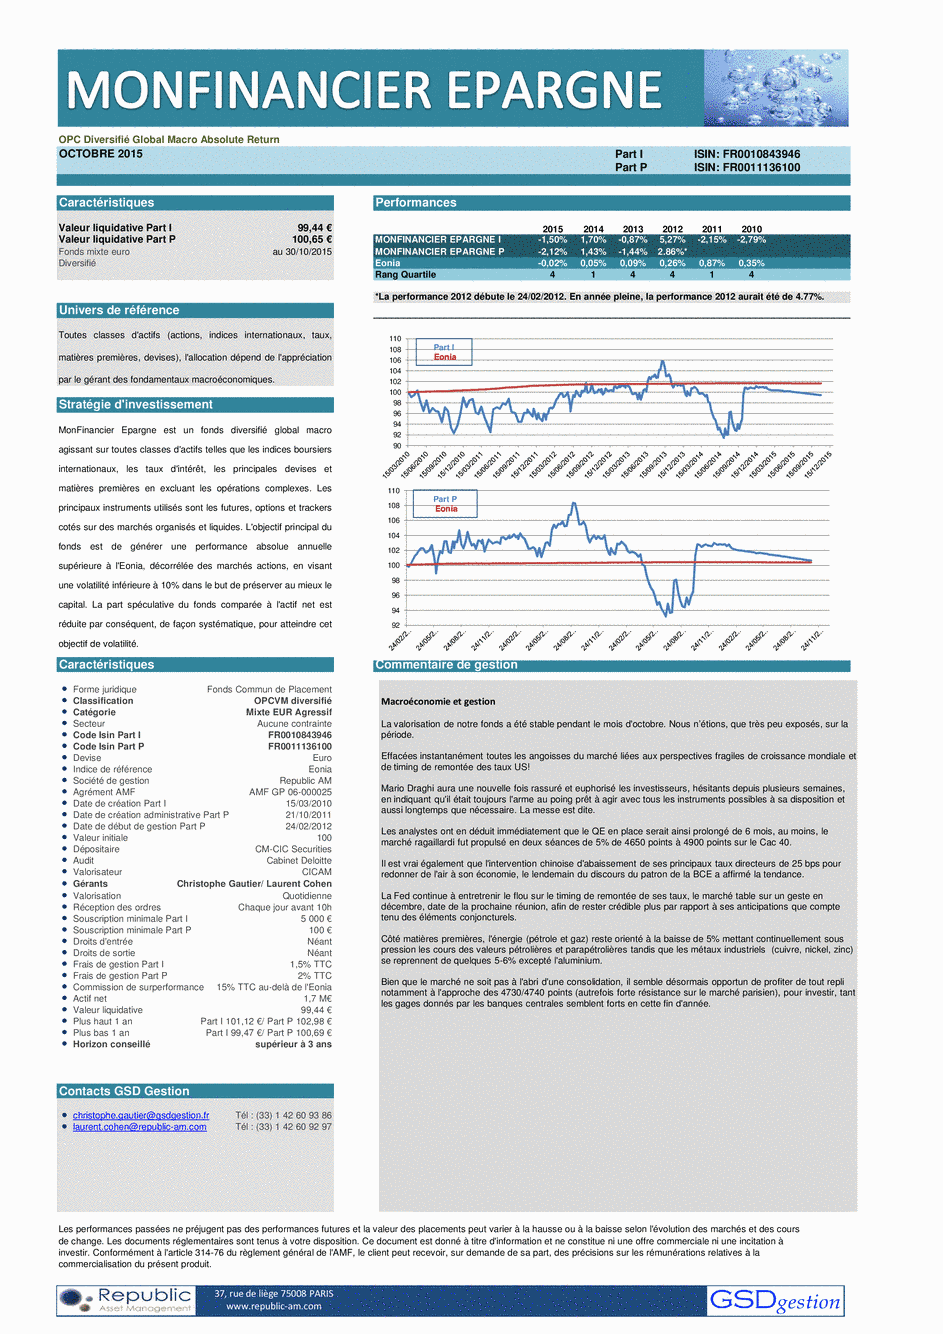 Reporting Monfinancier Epargne I - 03/11/2015 - French